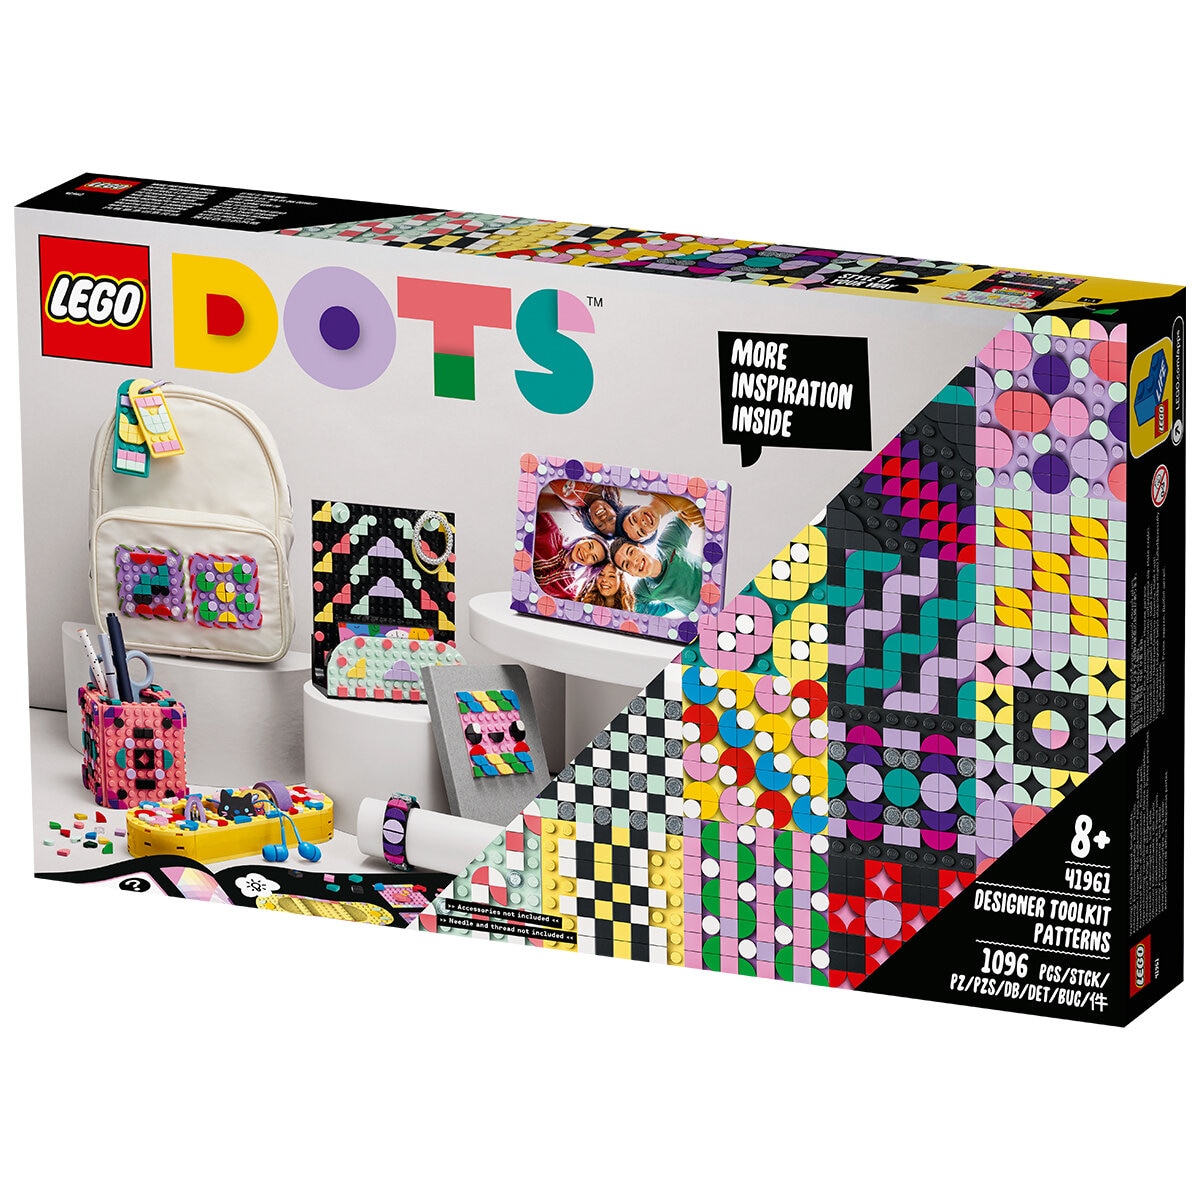 LEGO Dots Designer Tookit Patterns 41961